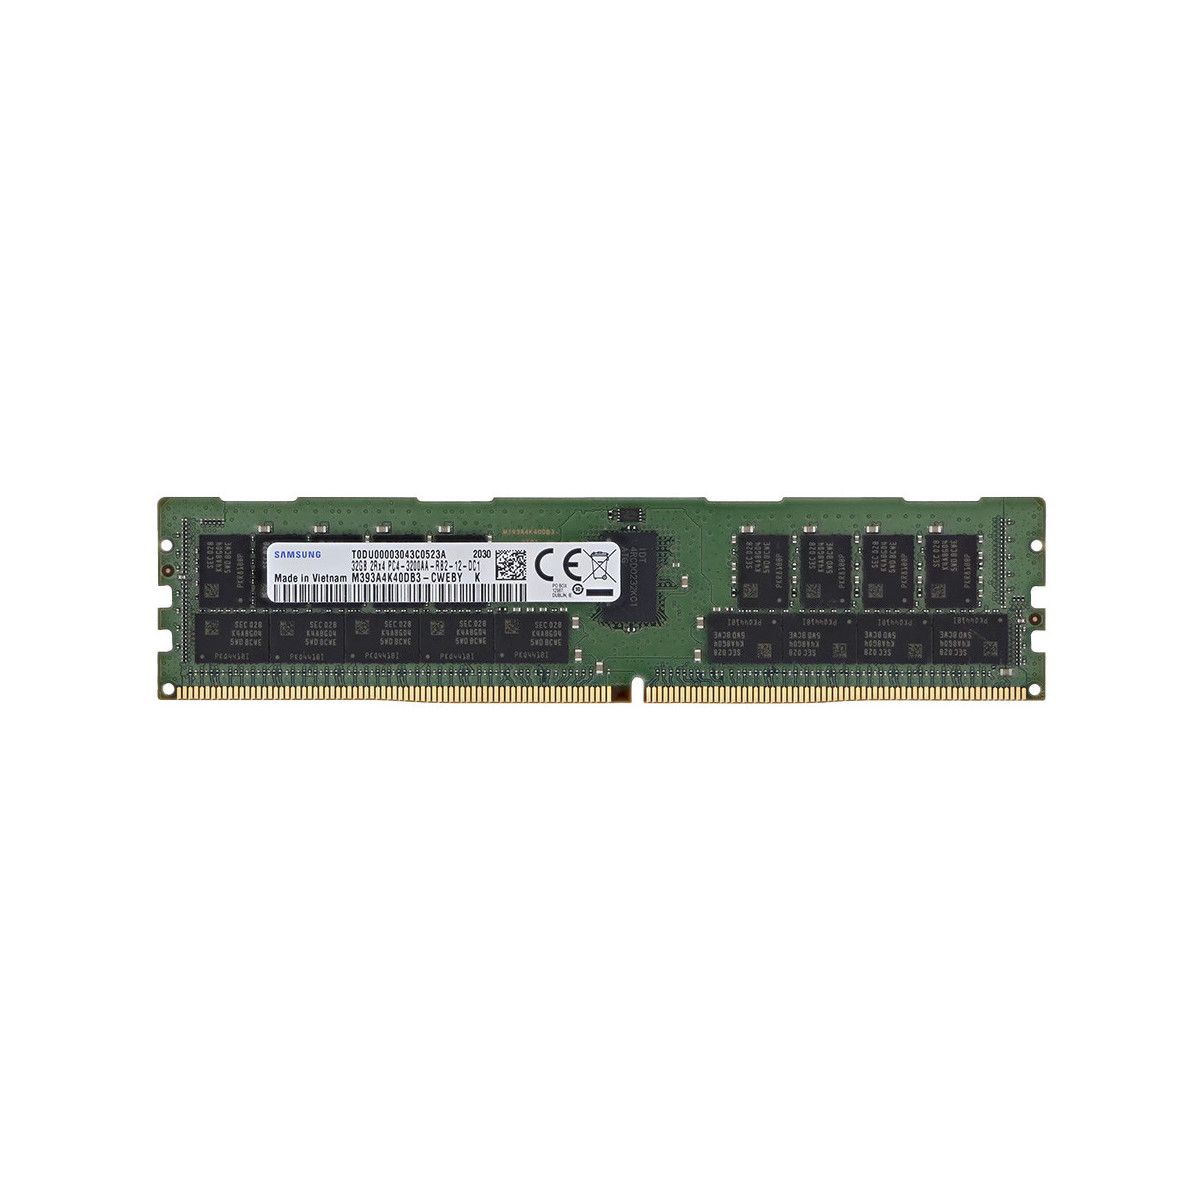 AB663423-MS - Memstar 1x 32GB DDR4-3200 RDIMM PC4-25600R - OEM compatible con Mem-Star Memoria 1 - Memstar 